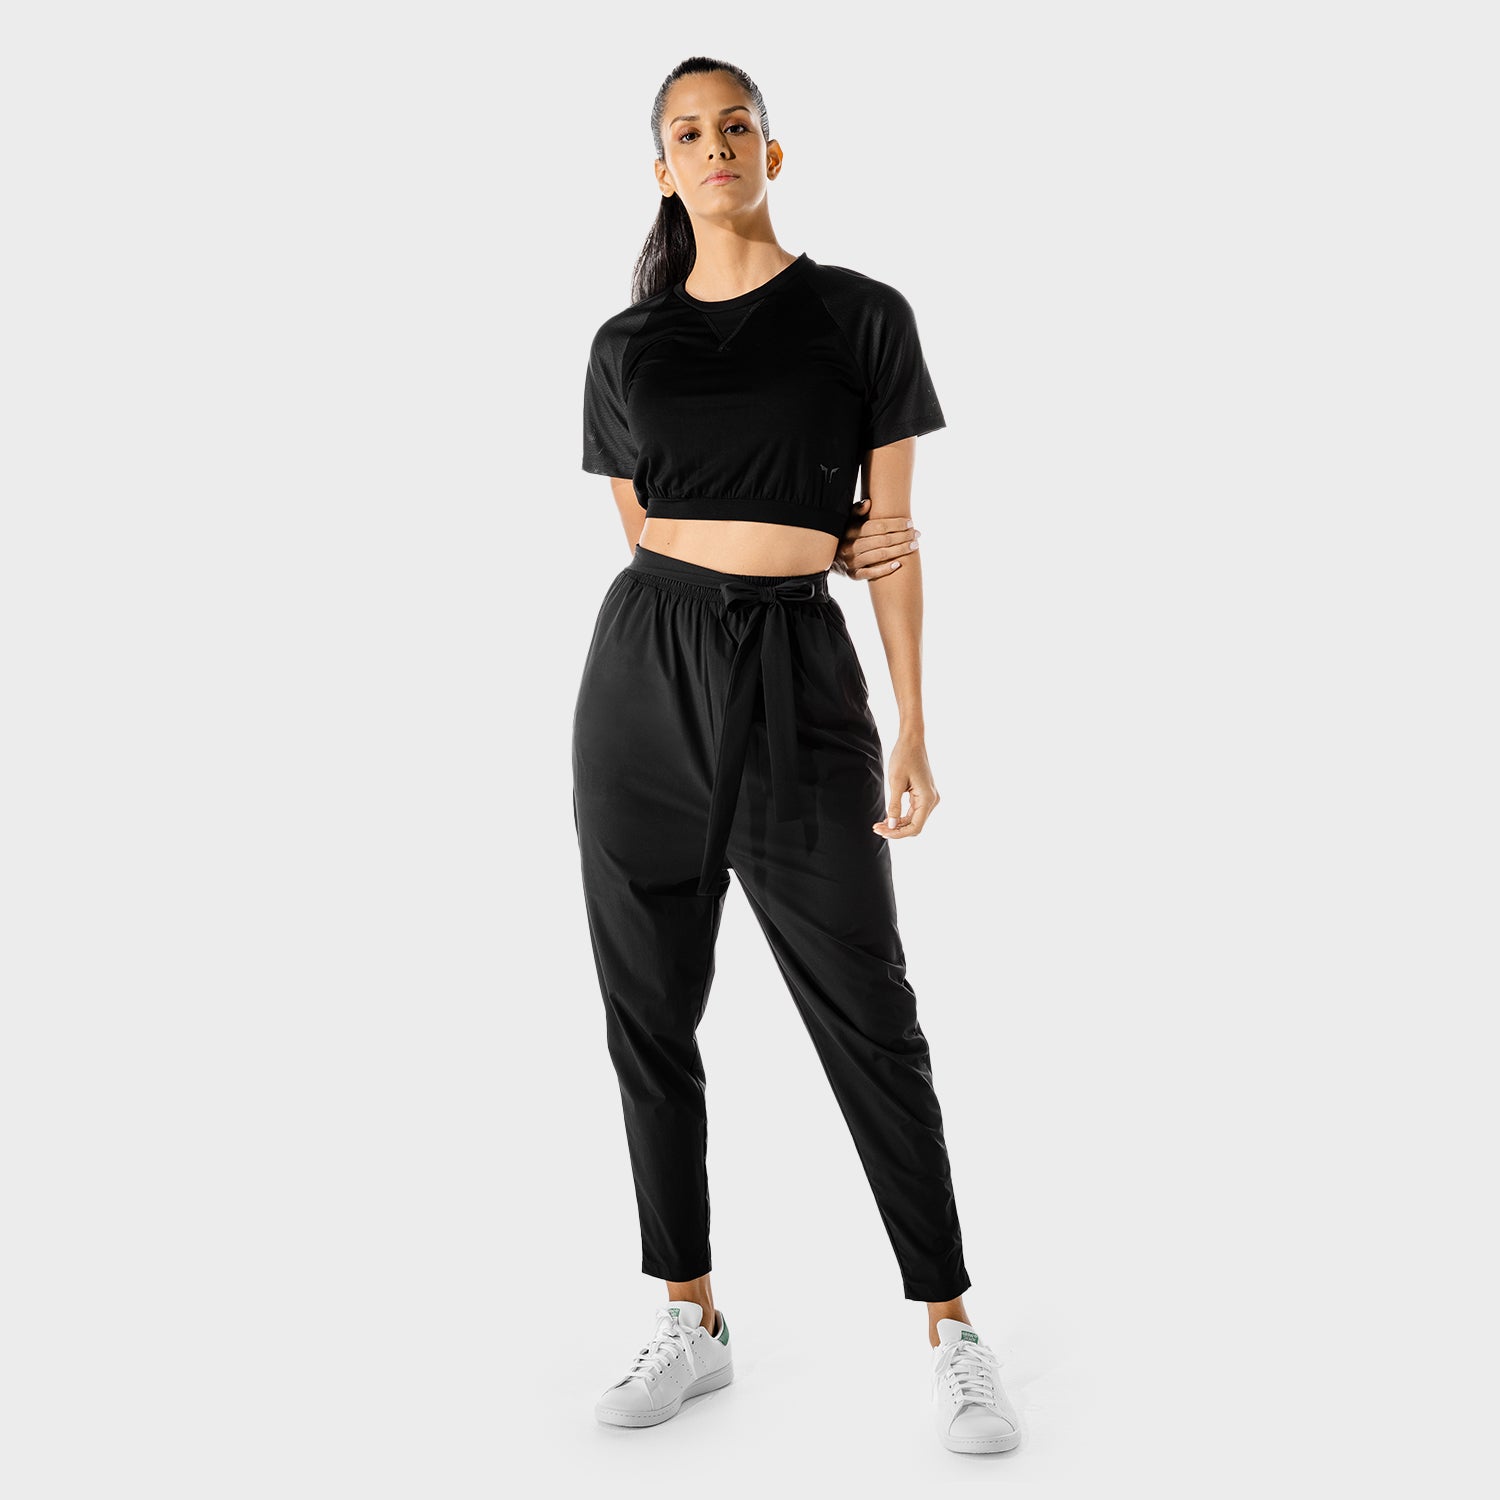 squatwolf-gym-wear-womens-fitness-crop-top-black-workout-shirts